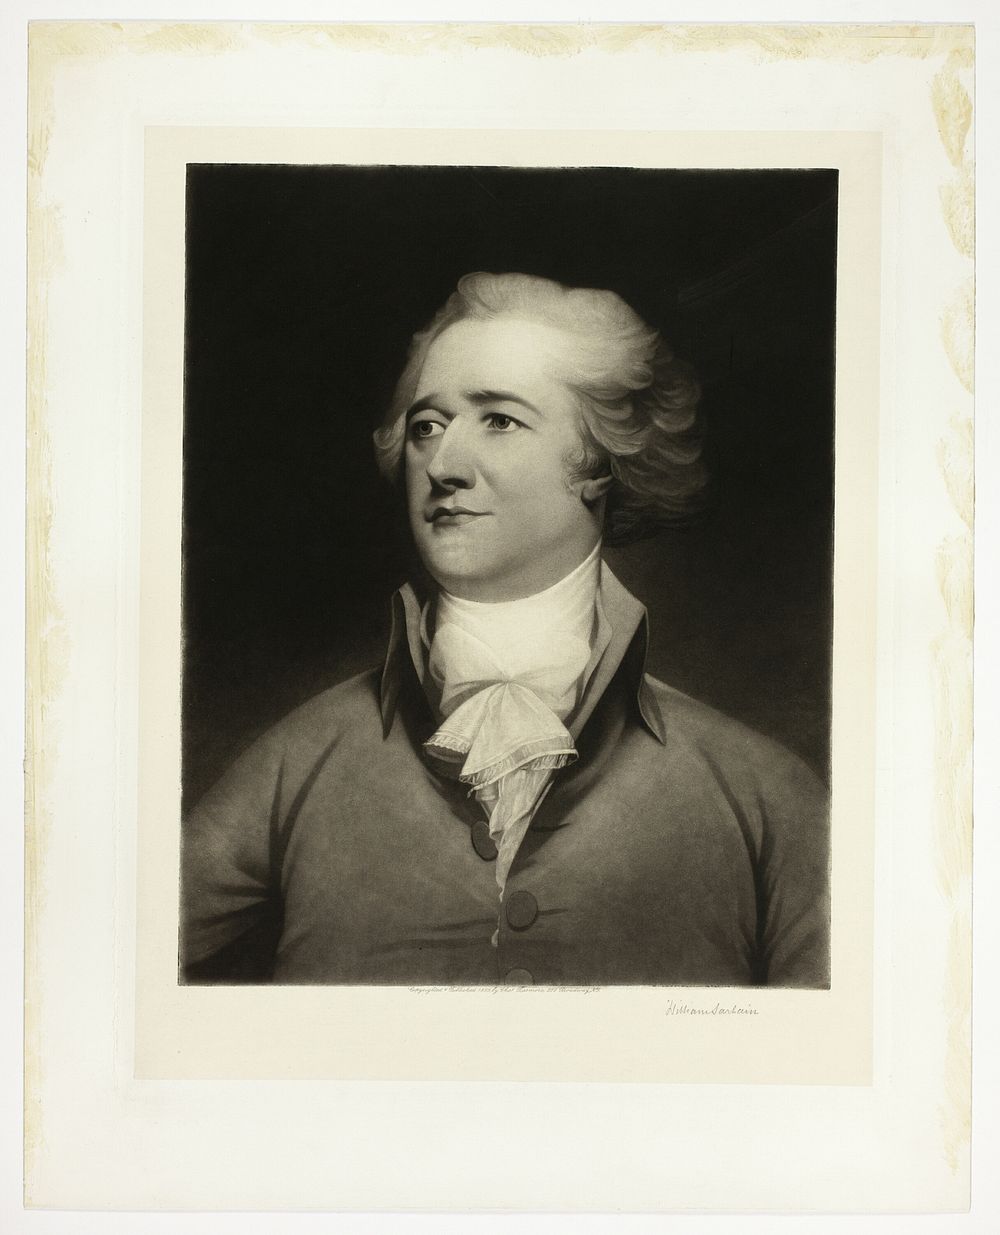 Portrait of Alexander Hamilton by William Sartain